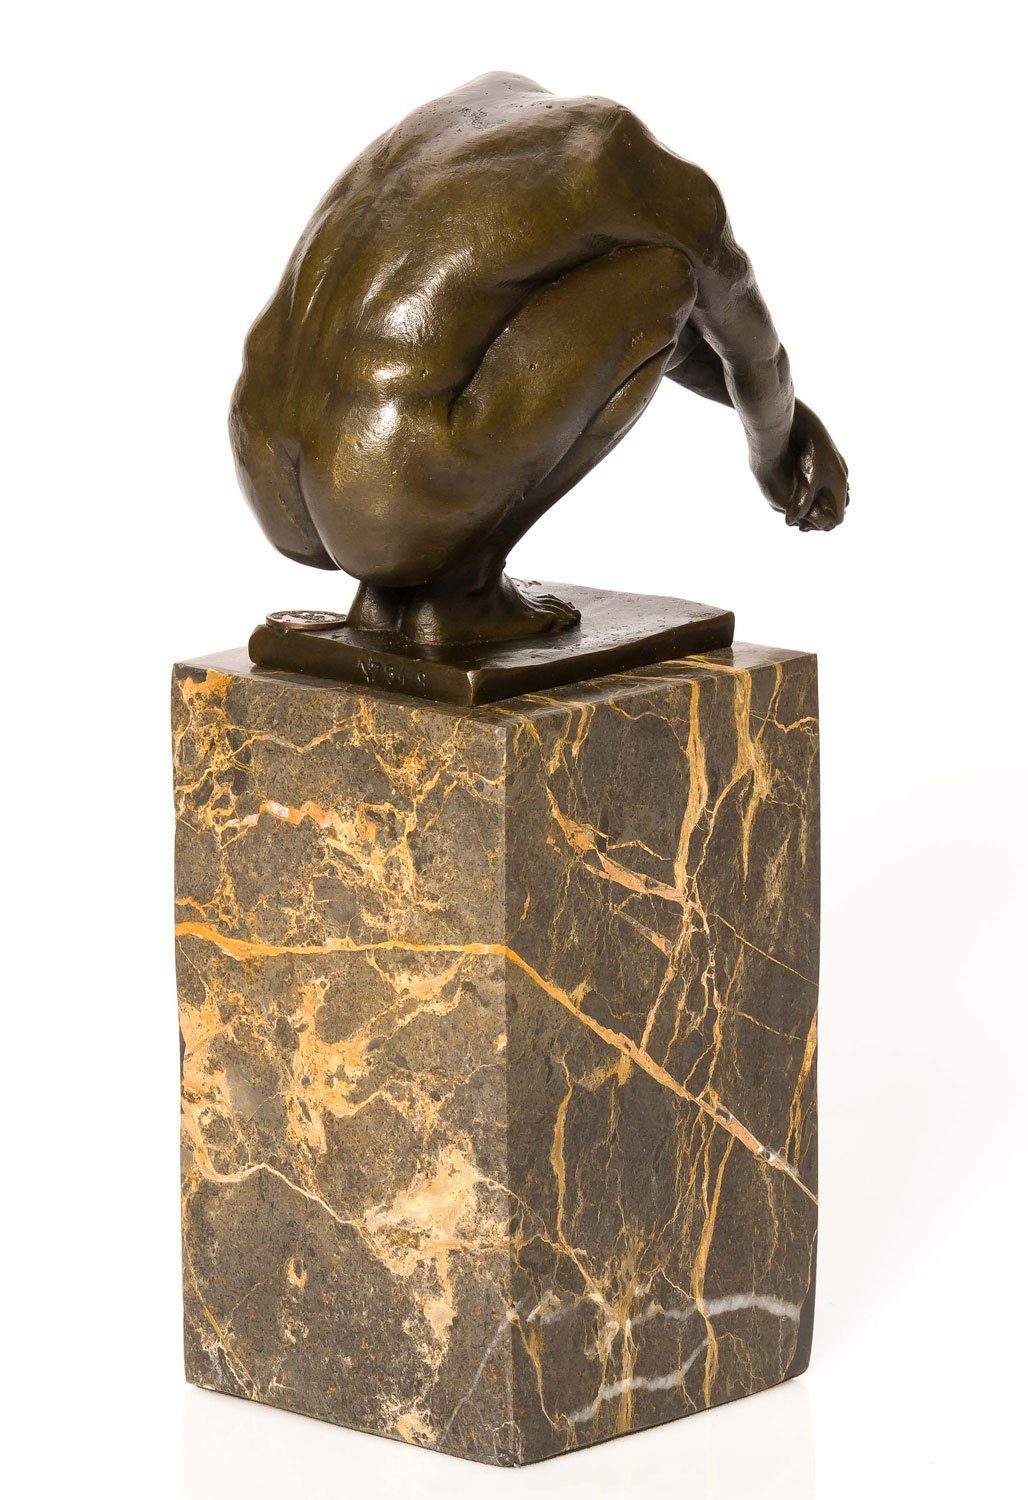 Bronze Skulptur Schwimmer Aubaho Erotik Skulptur antik Skulptur Figur Turmspringer Akt